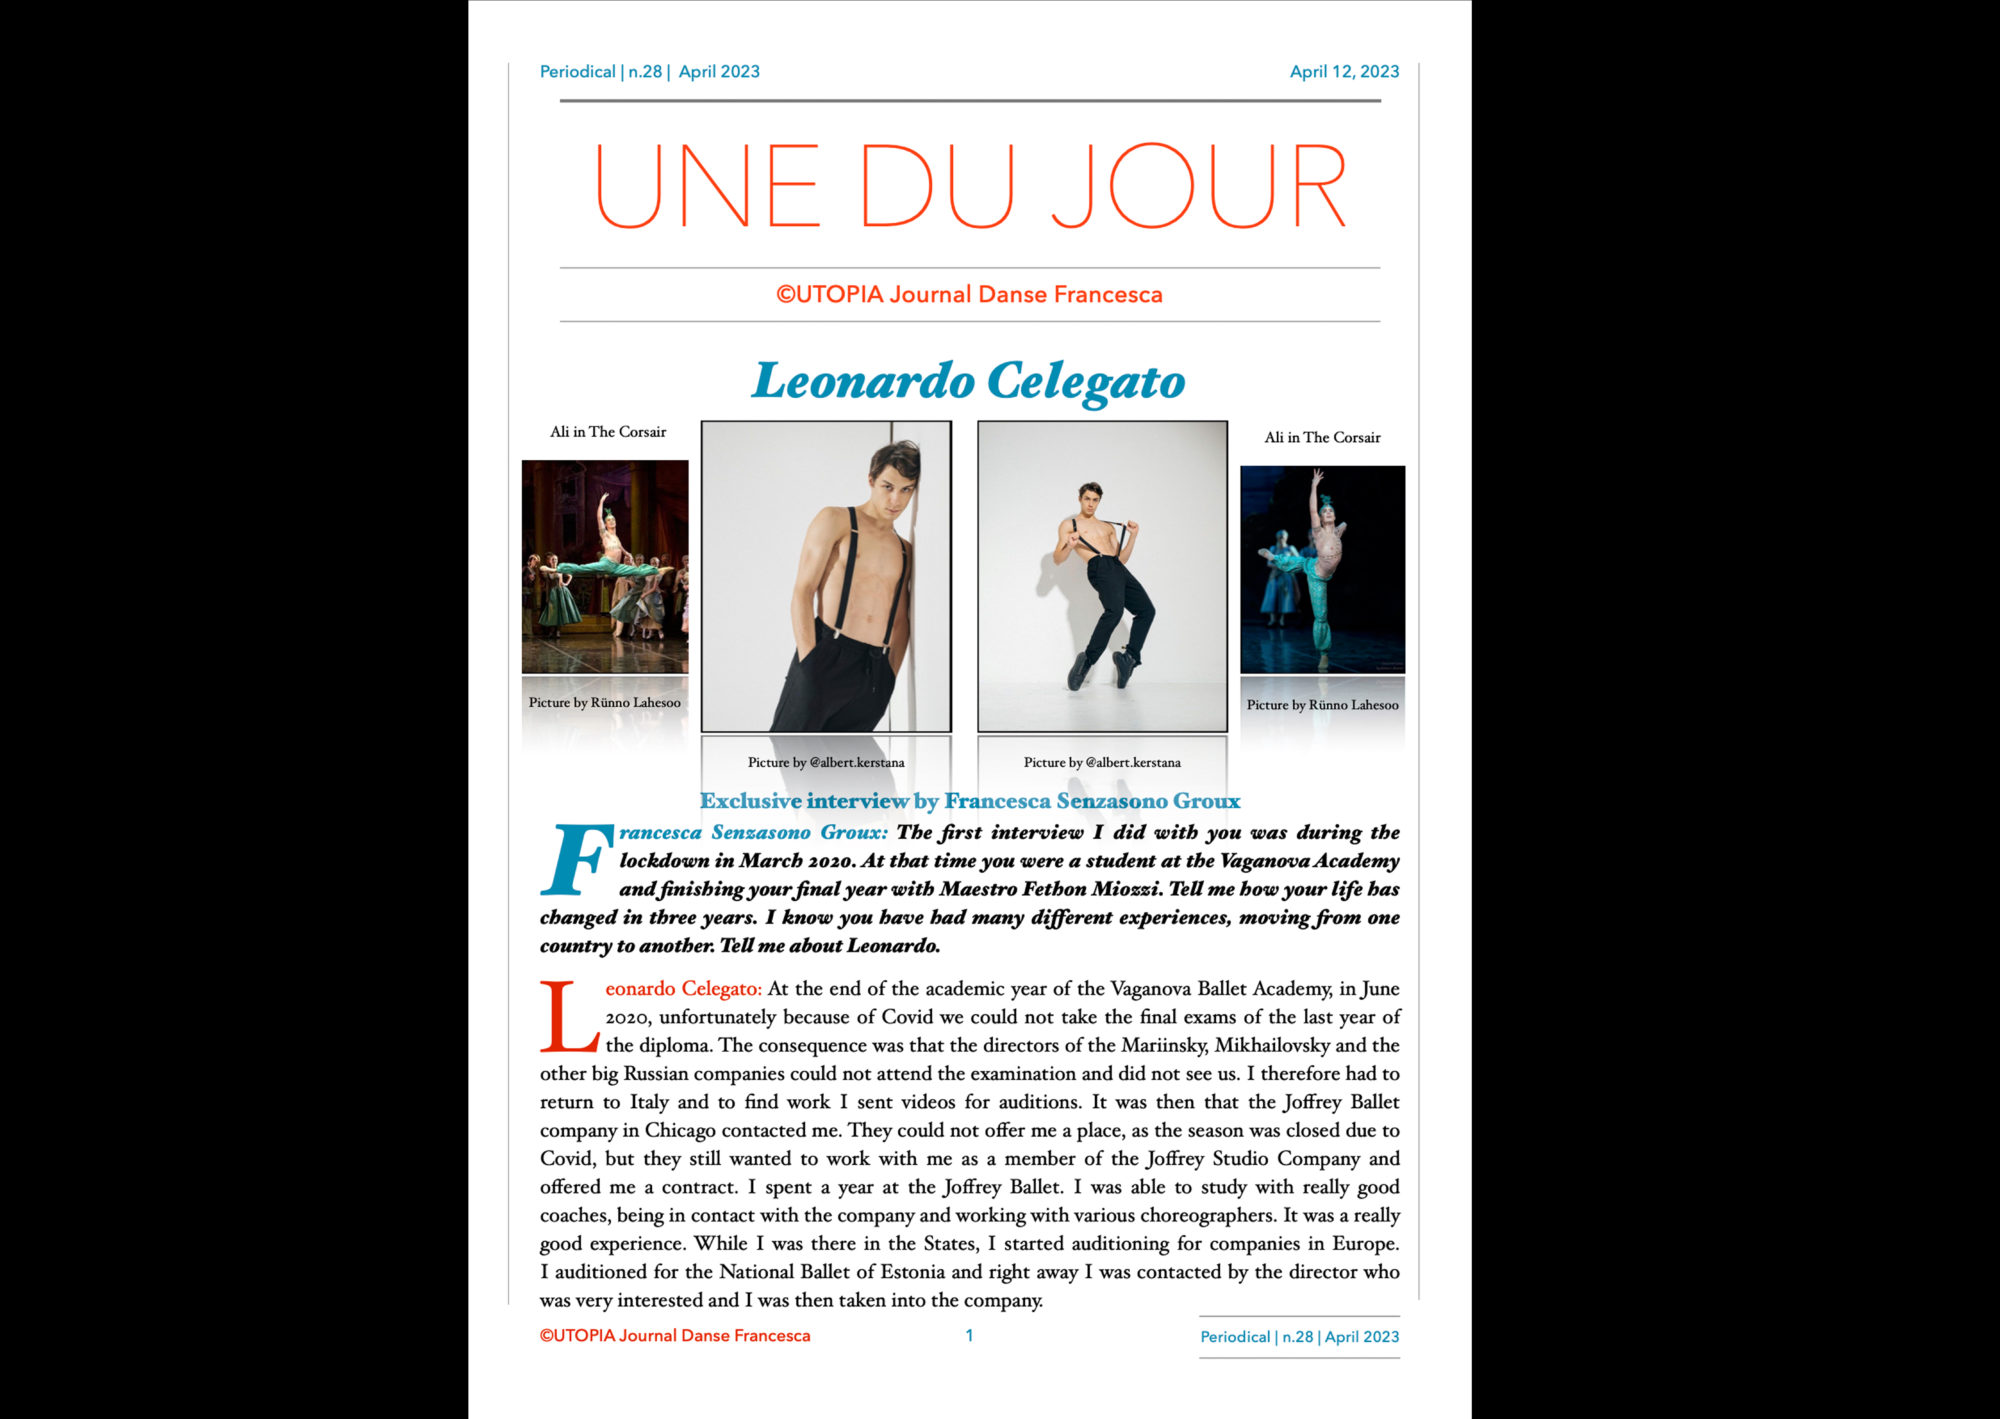 ©UTOPIA Journal Danse Francesca Periodical n.28 April 12, 2023 page 1